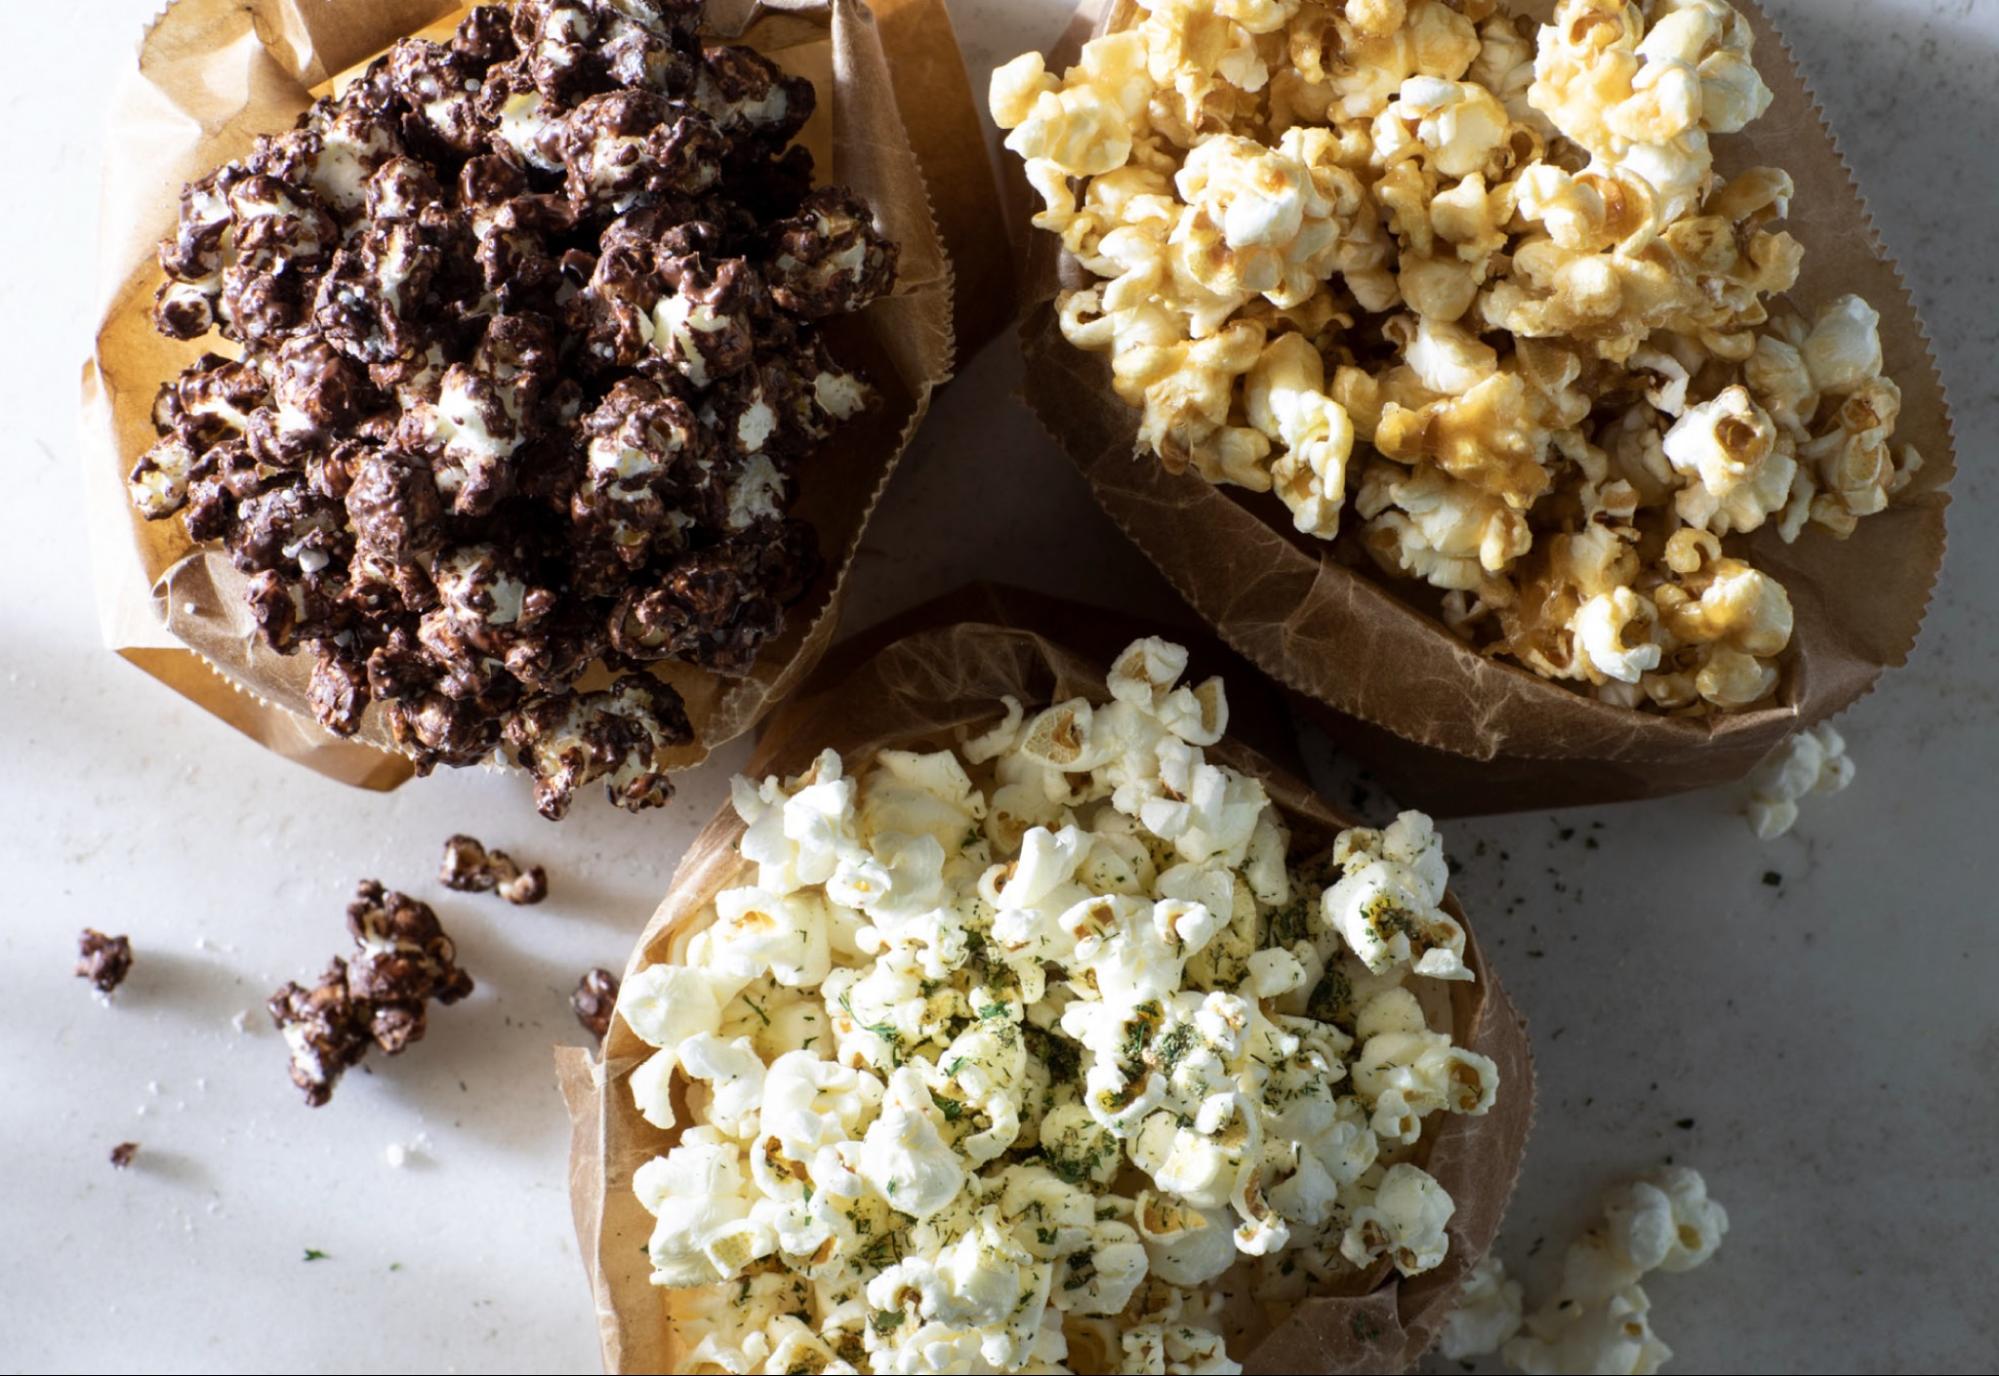 Three flavors of popcorn